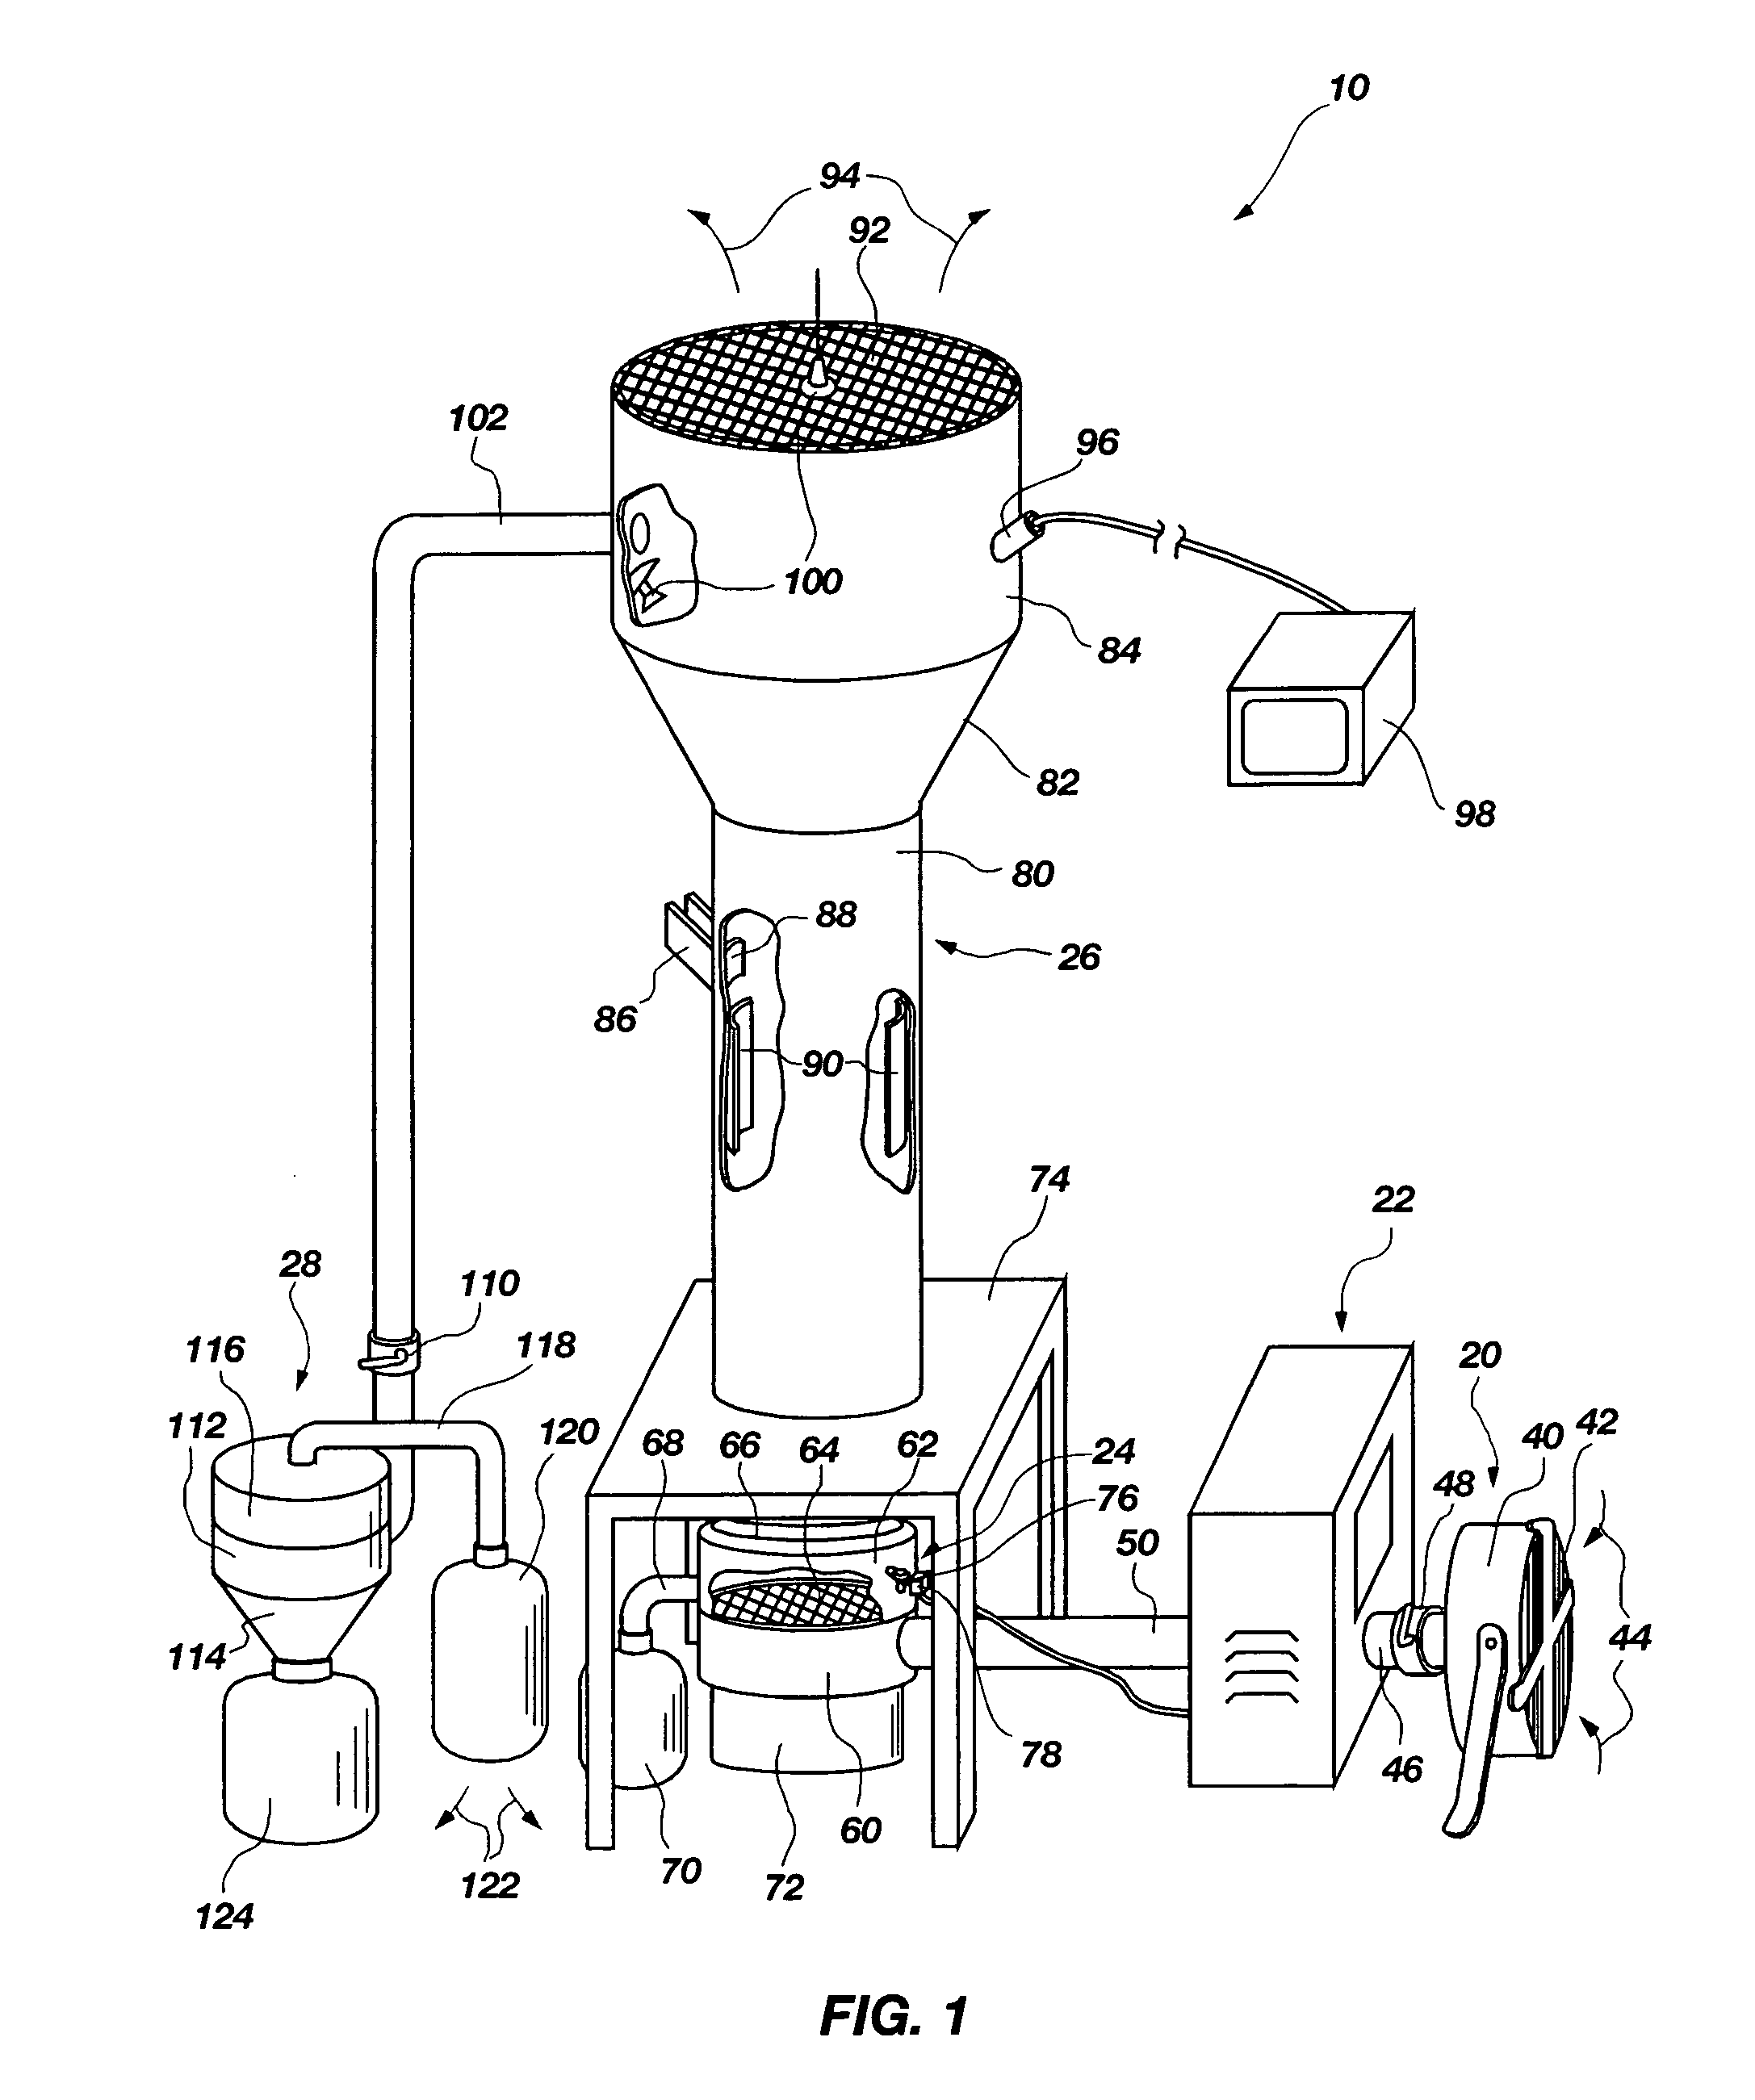 Brine shrimp egg processing apparatus and method